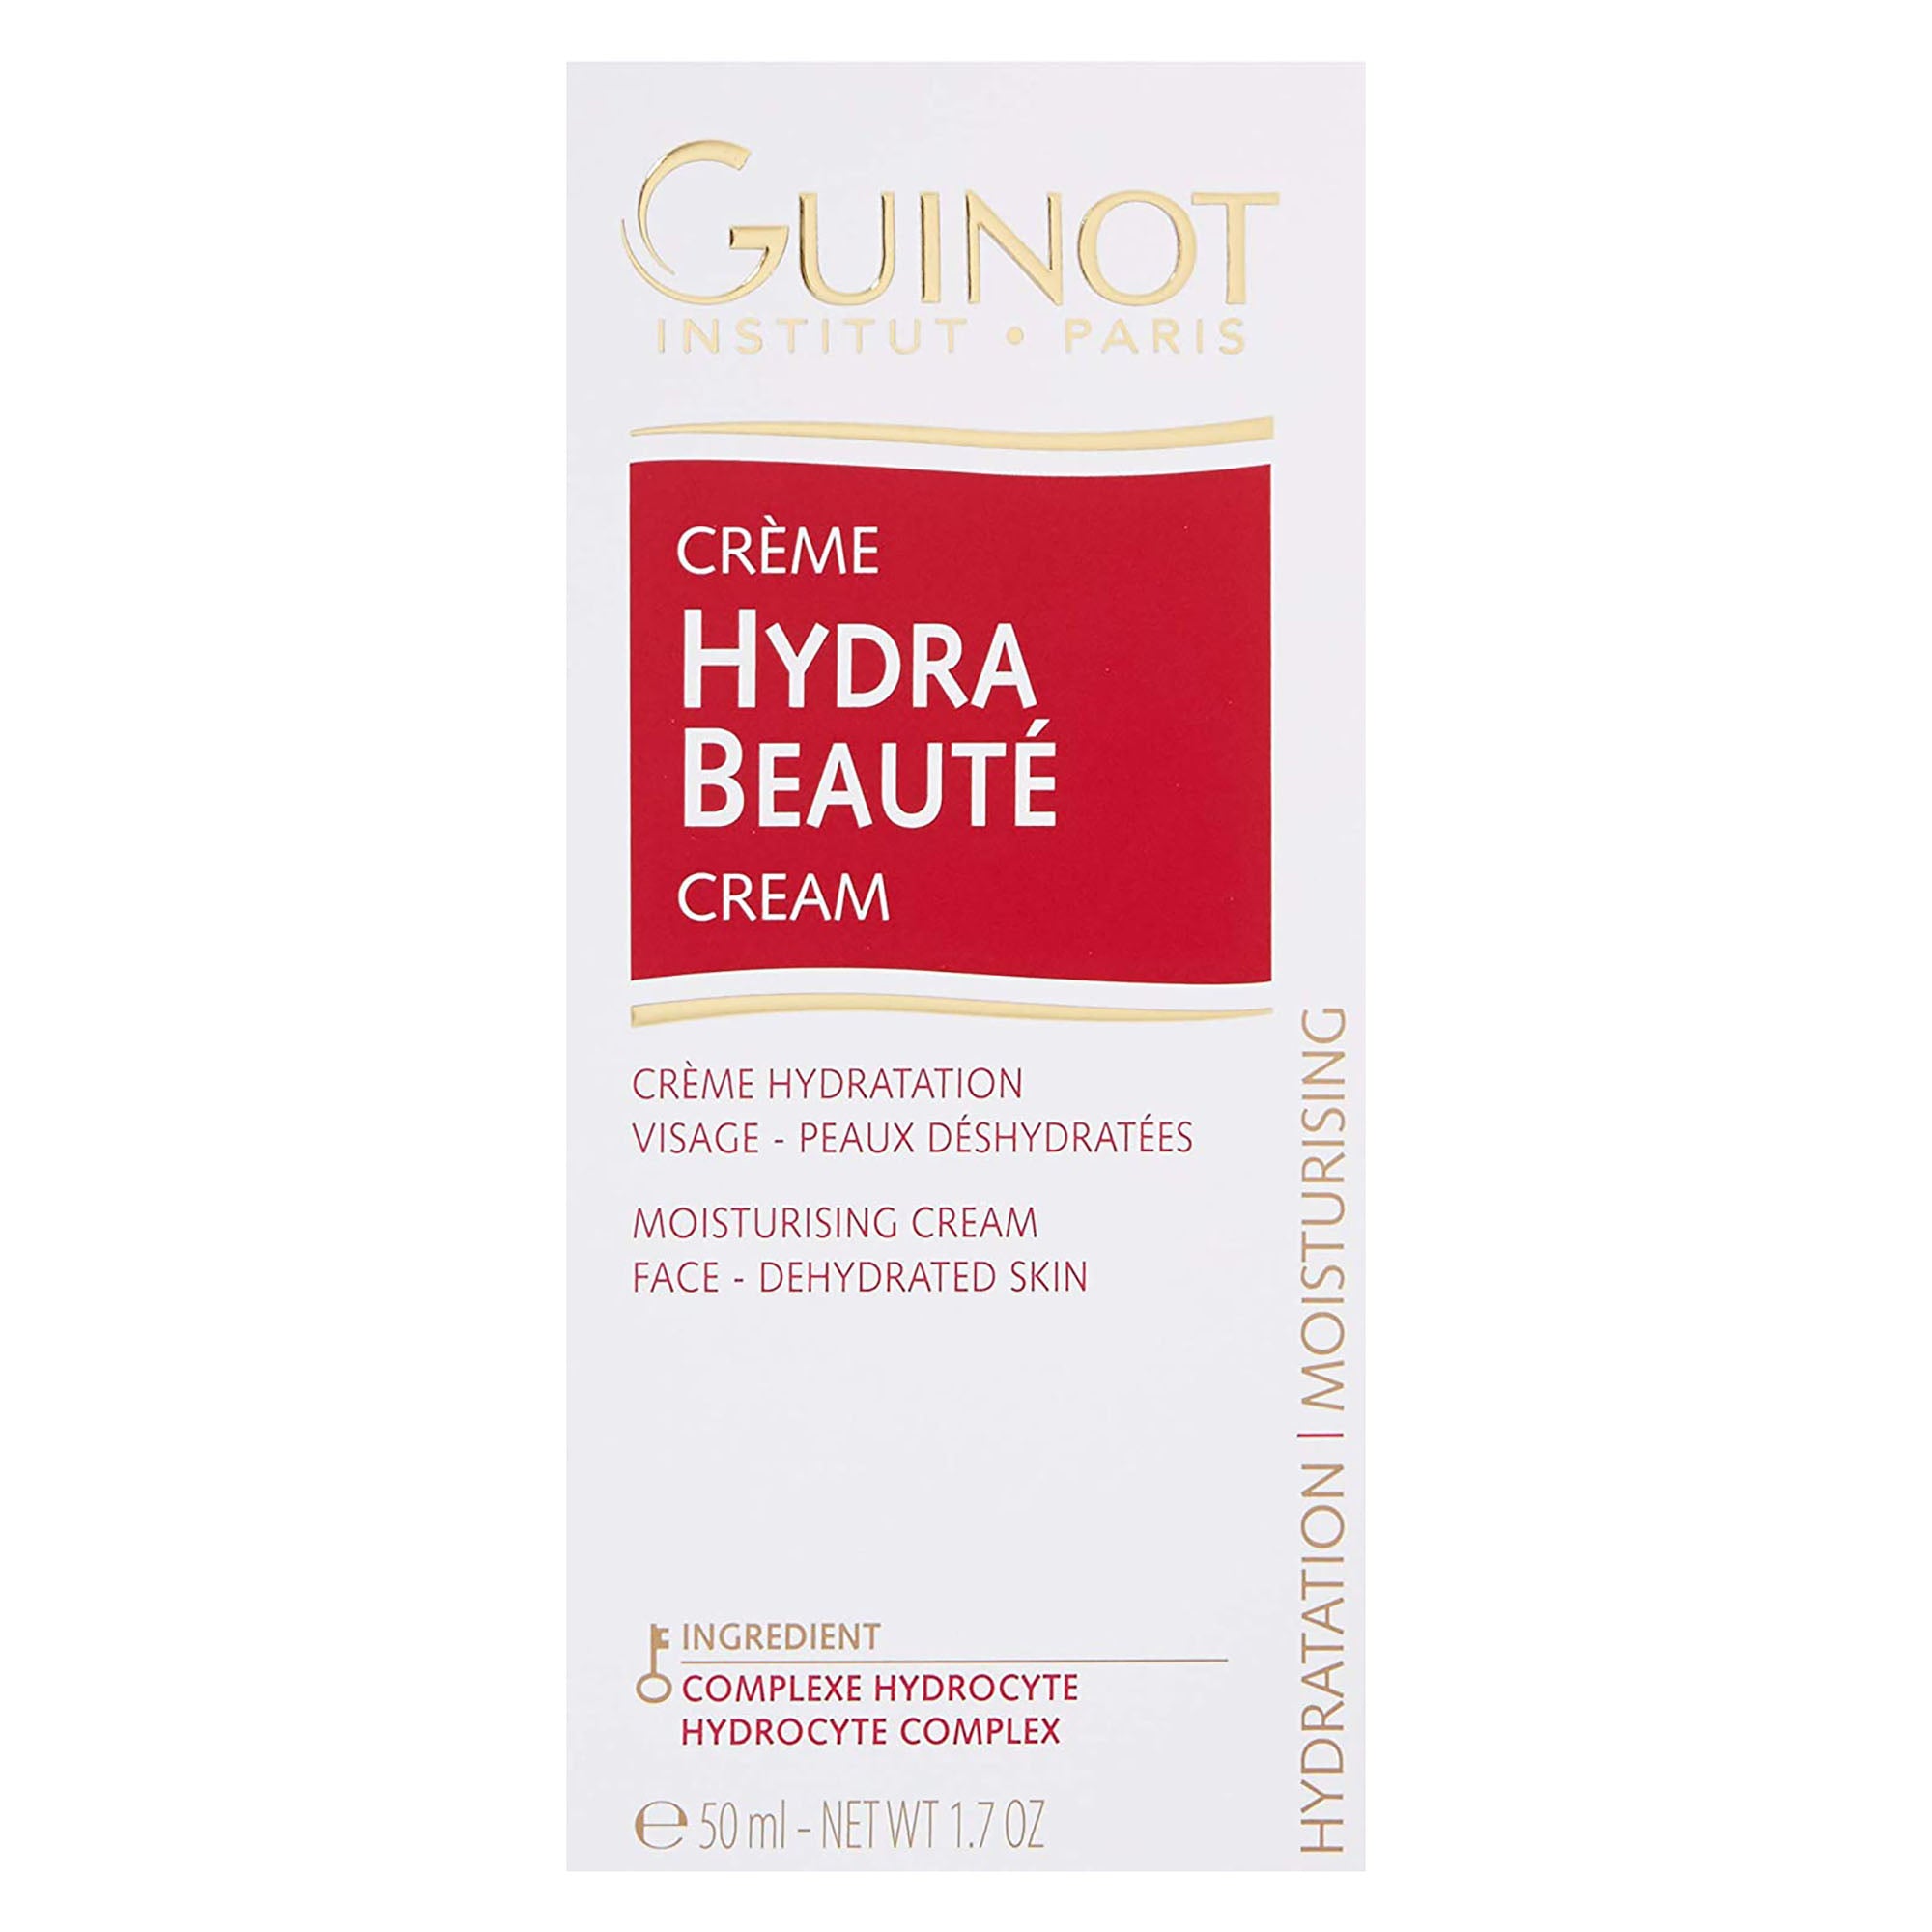 Guinot Crème Hydra Beaute Cream / 1.7